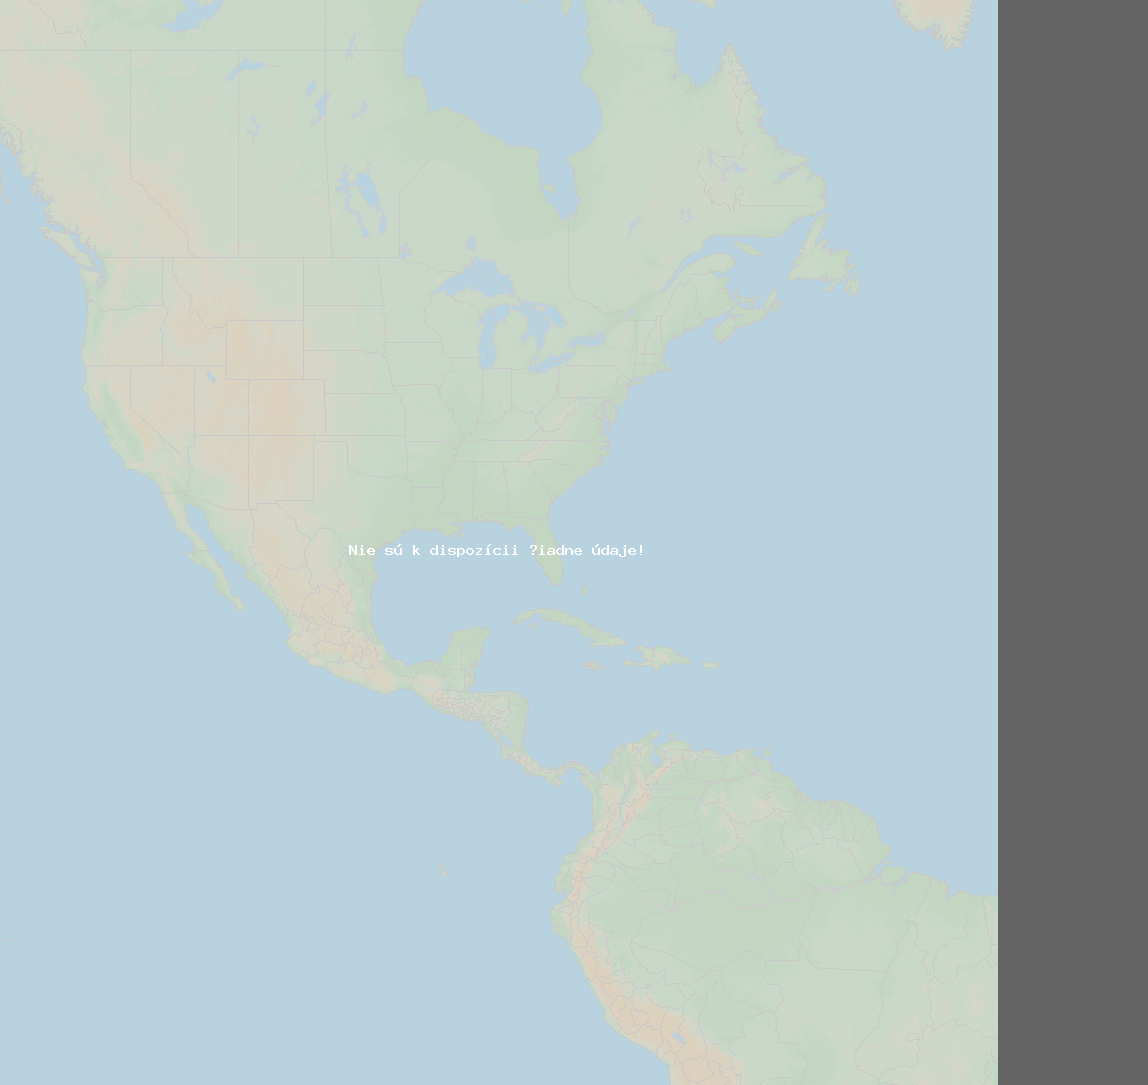 Pomer bleskov (Stanica indianapolis) North America 2024 